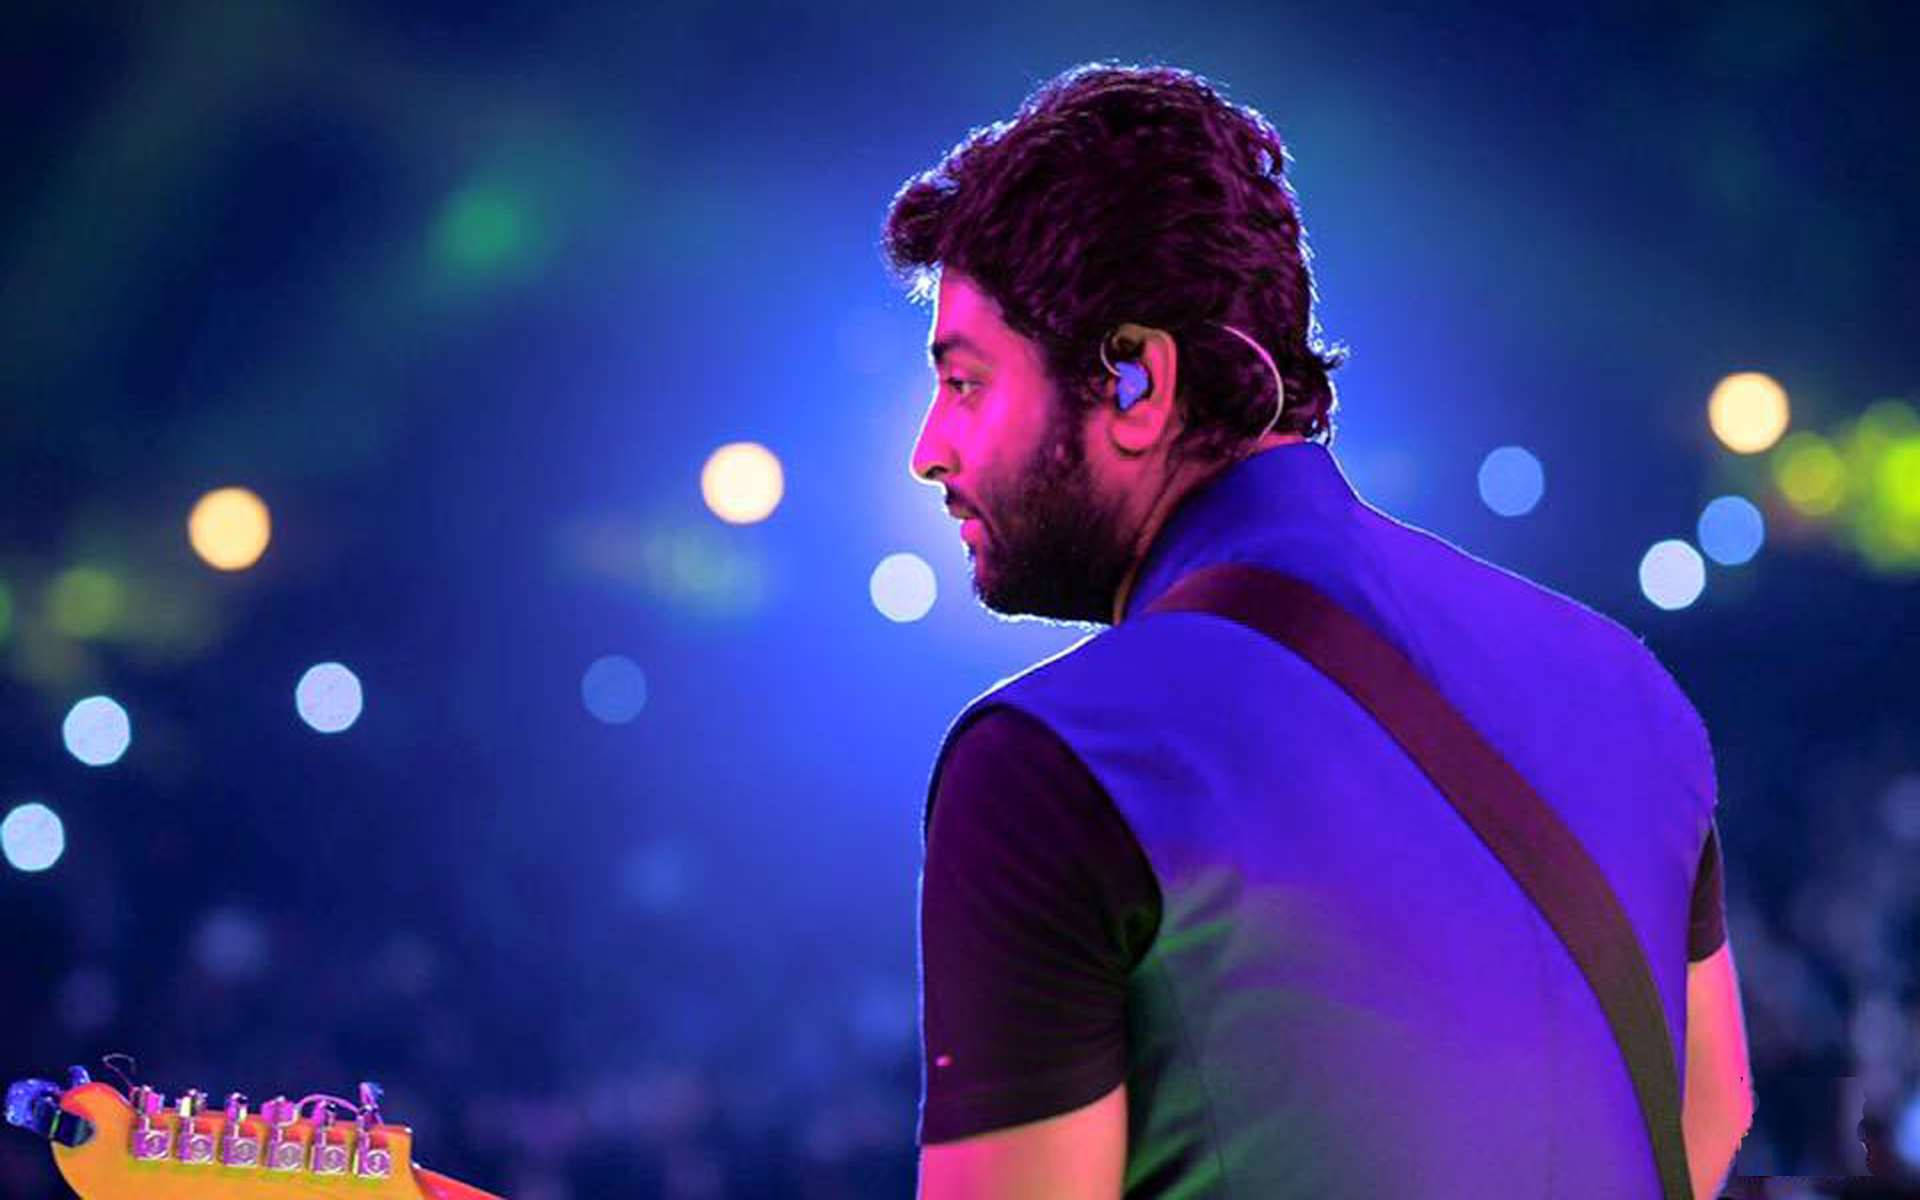 Arijit Singh Indian Singer Guitar Performance On Stage Background